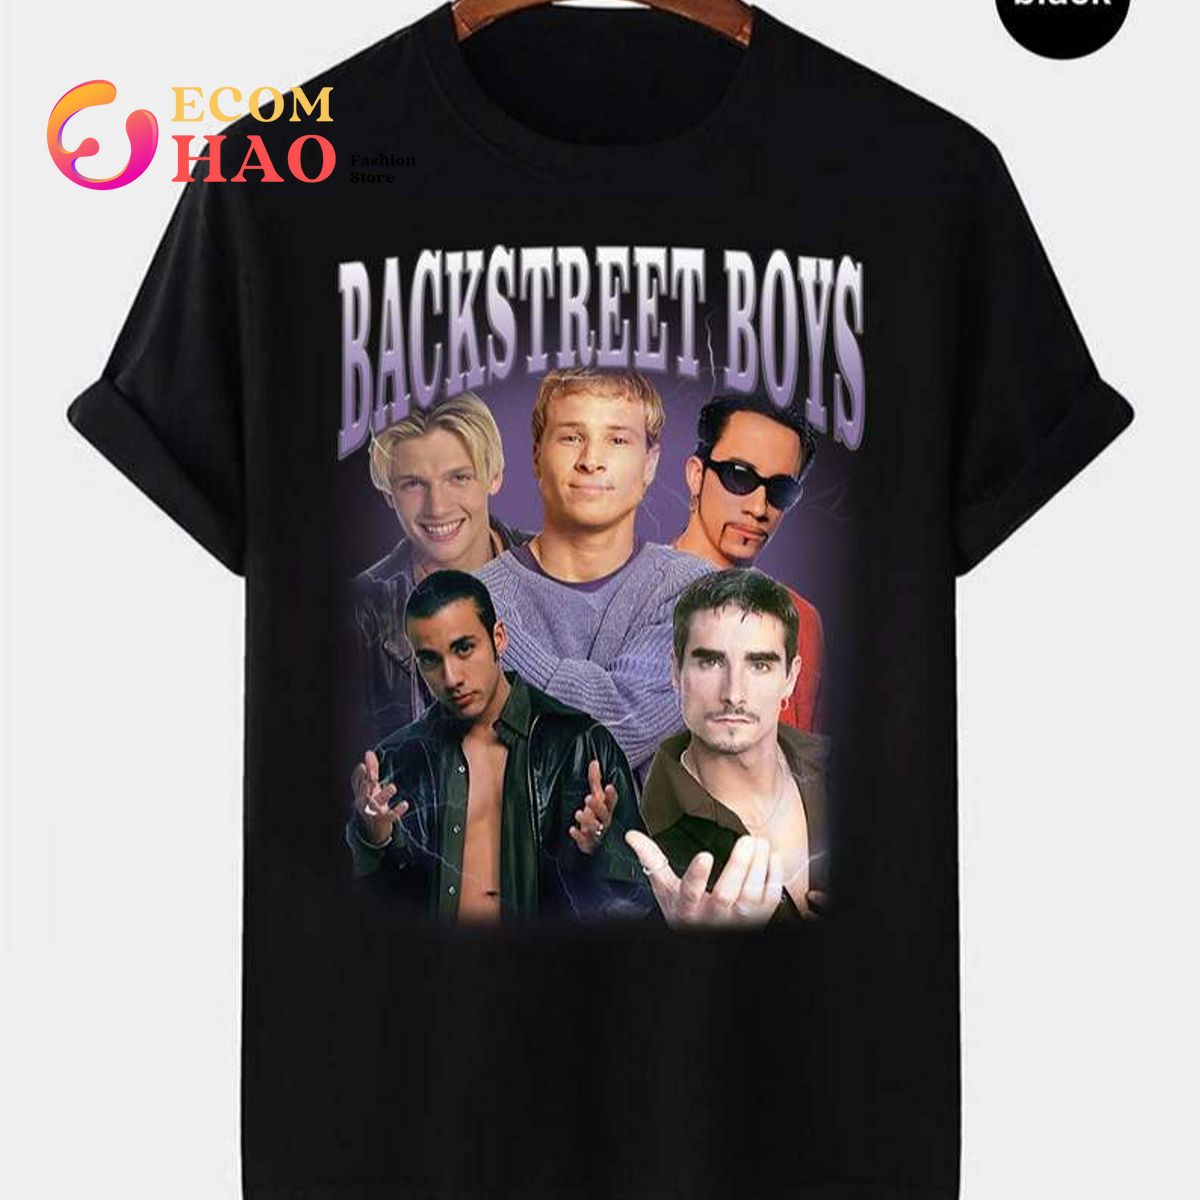 Backstreet Boys Band Vintage Retro Style Rap Music Hip Hop T Shirt  Ecomhao Store